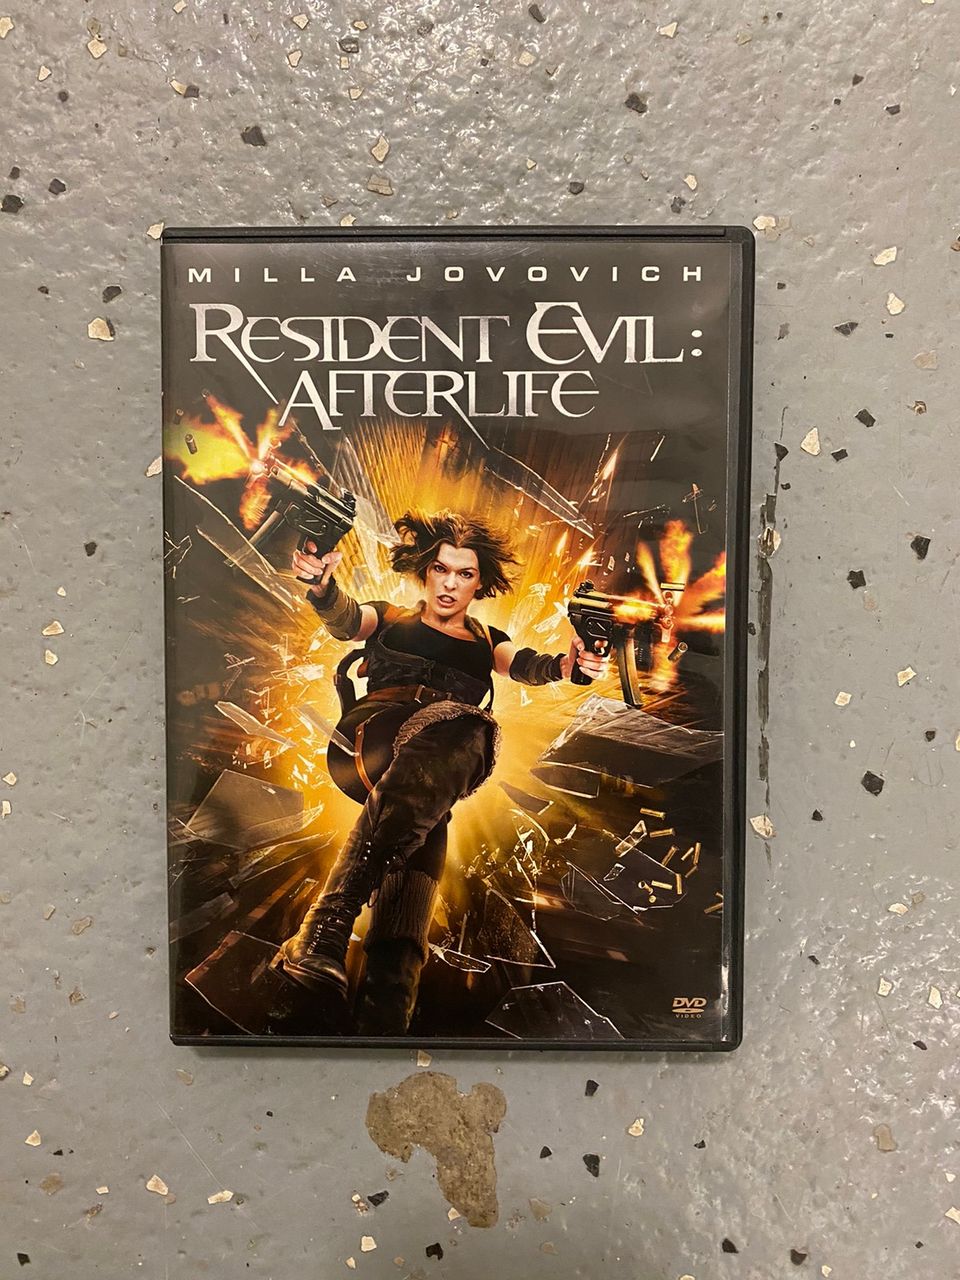 Resident Evli afterlife dvd